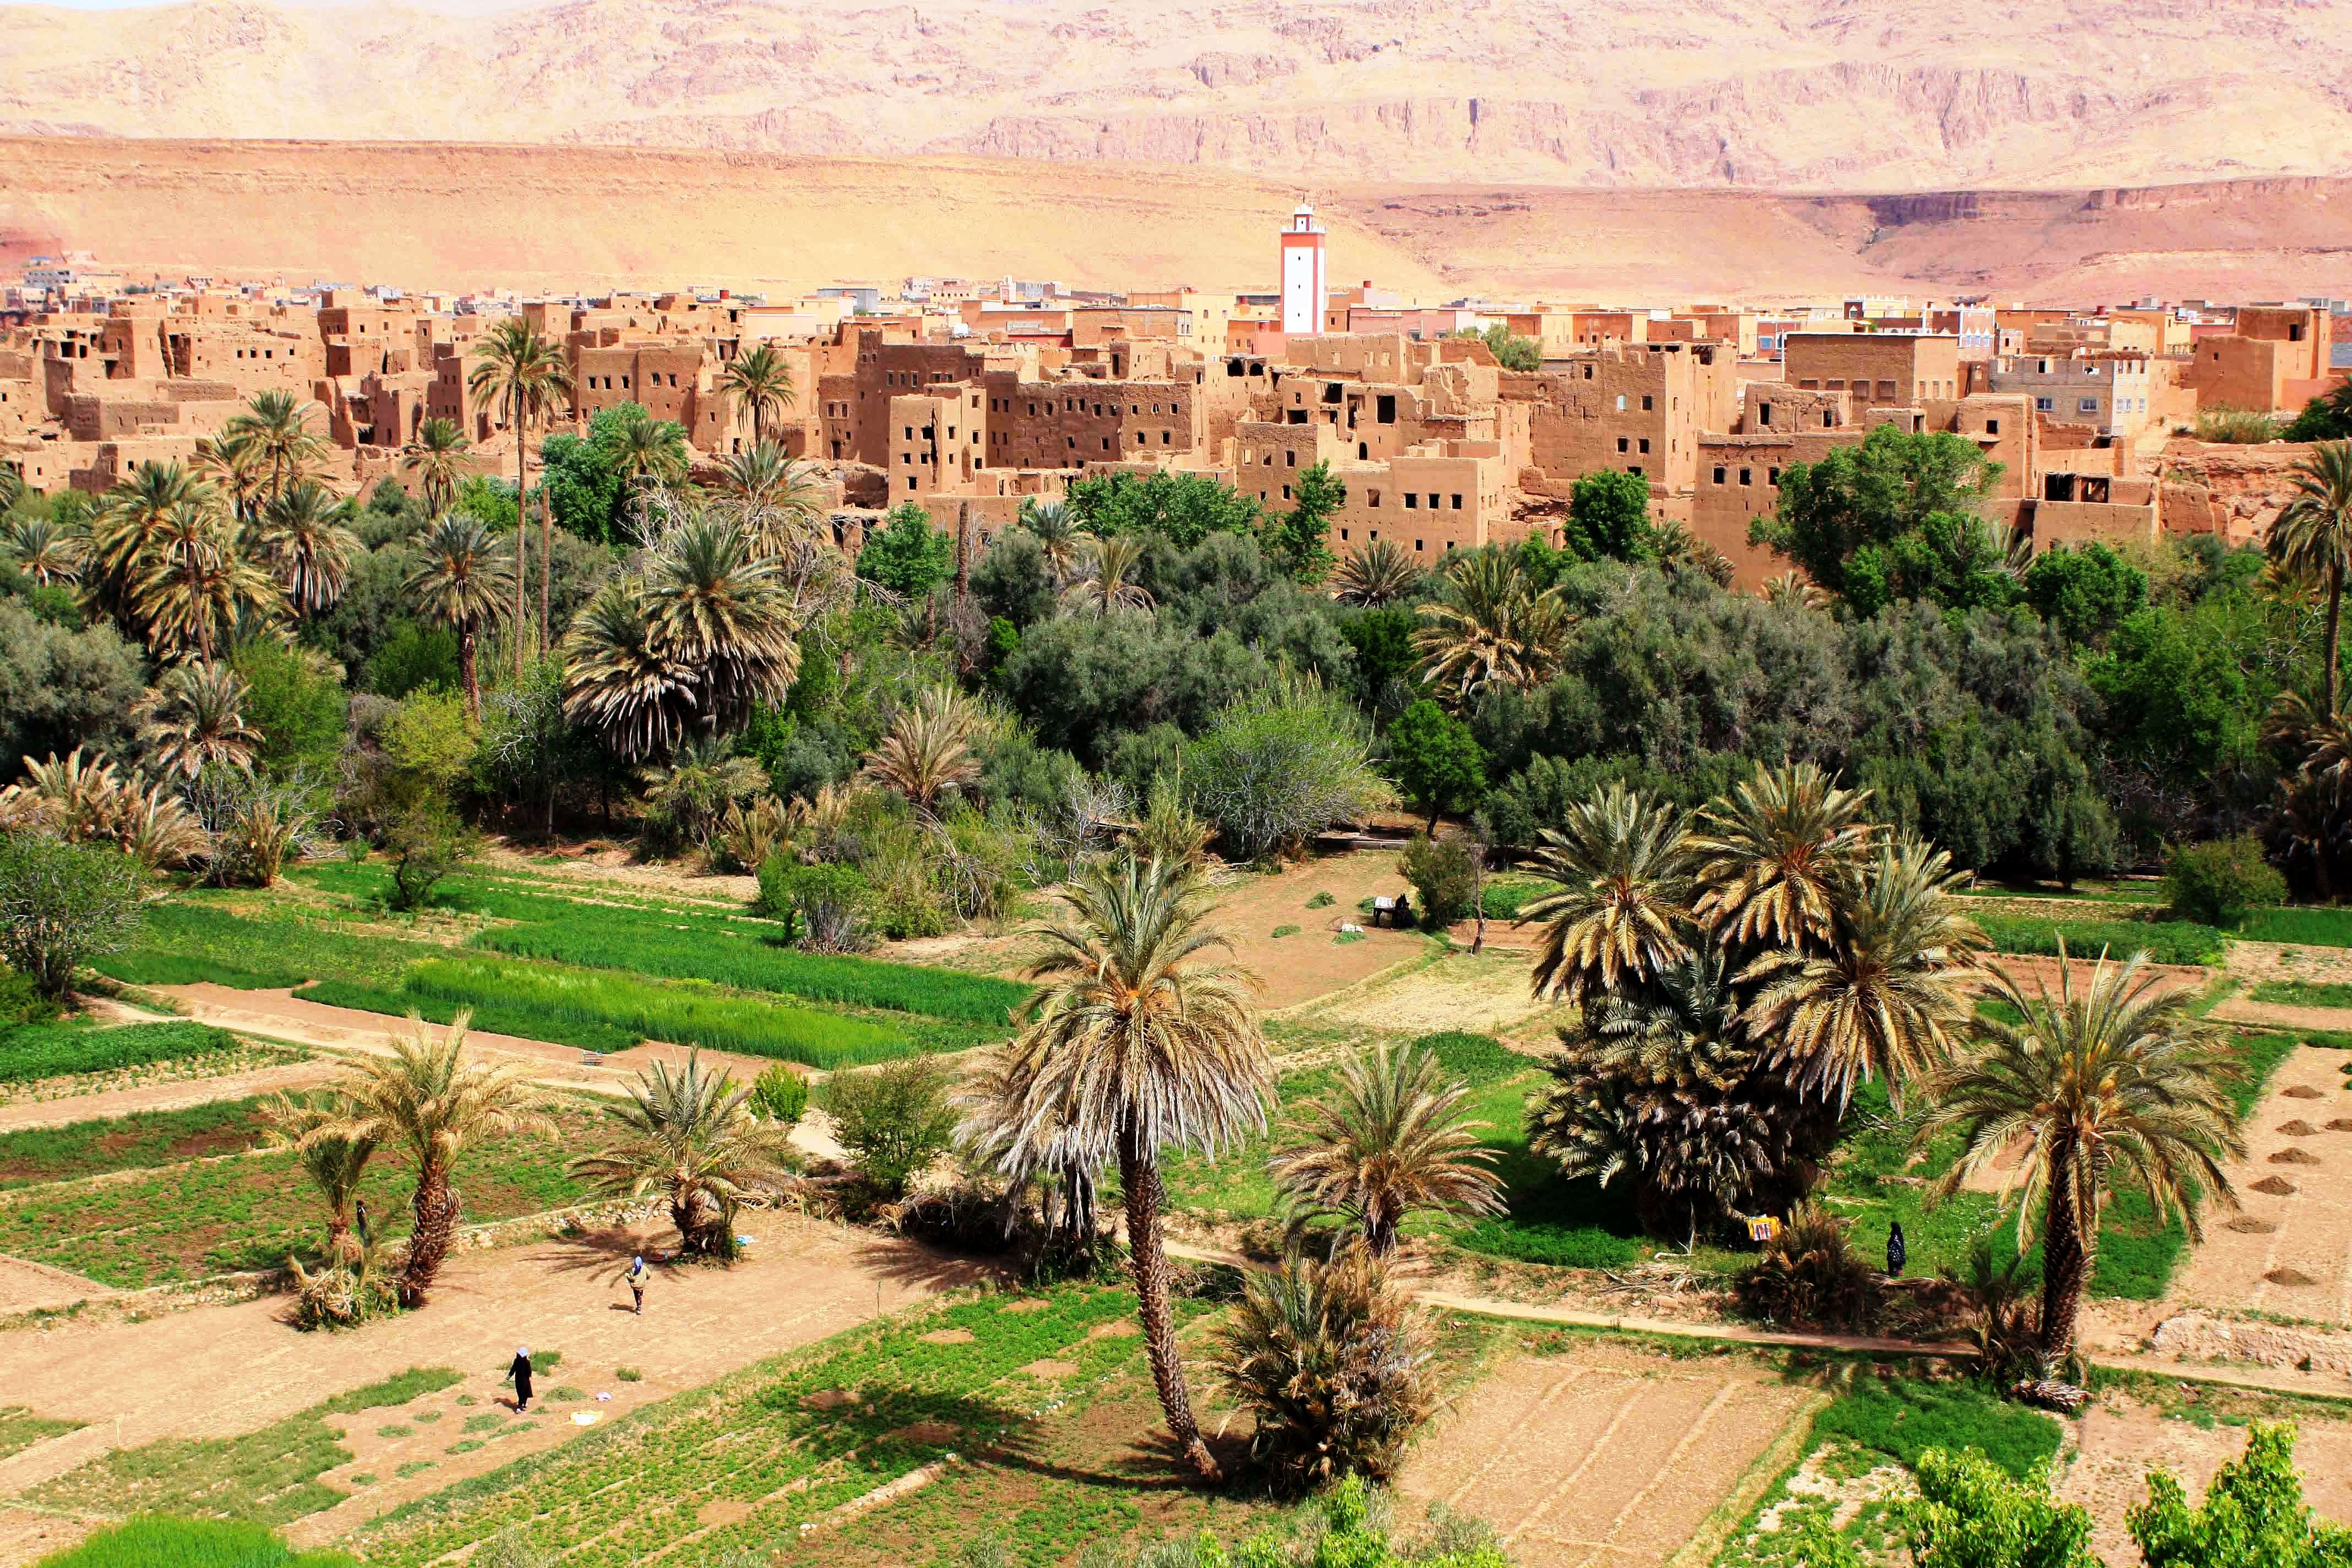 03 days Sahara desert shared group tour to Erg Chebbi in Merzouga from Marrakech